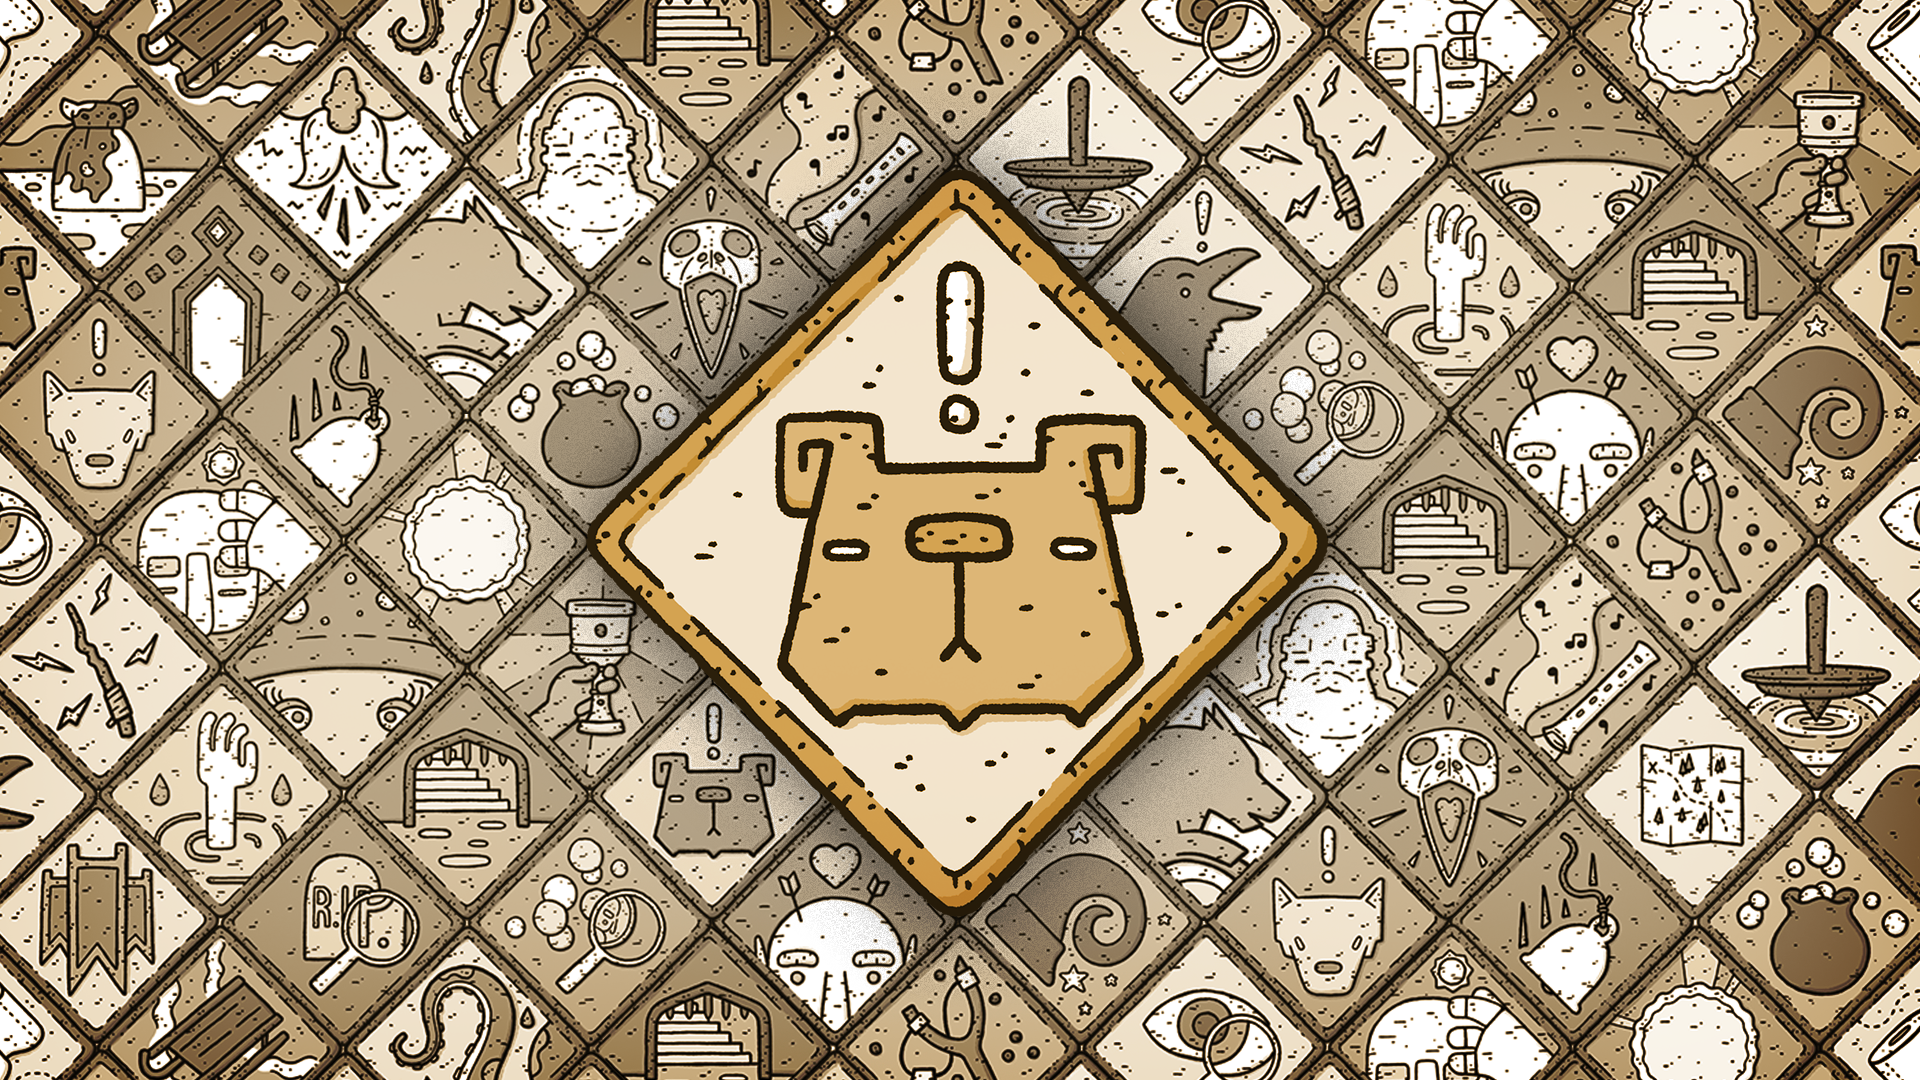 Icon for Bear Rouser